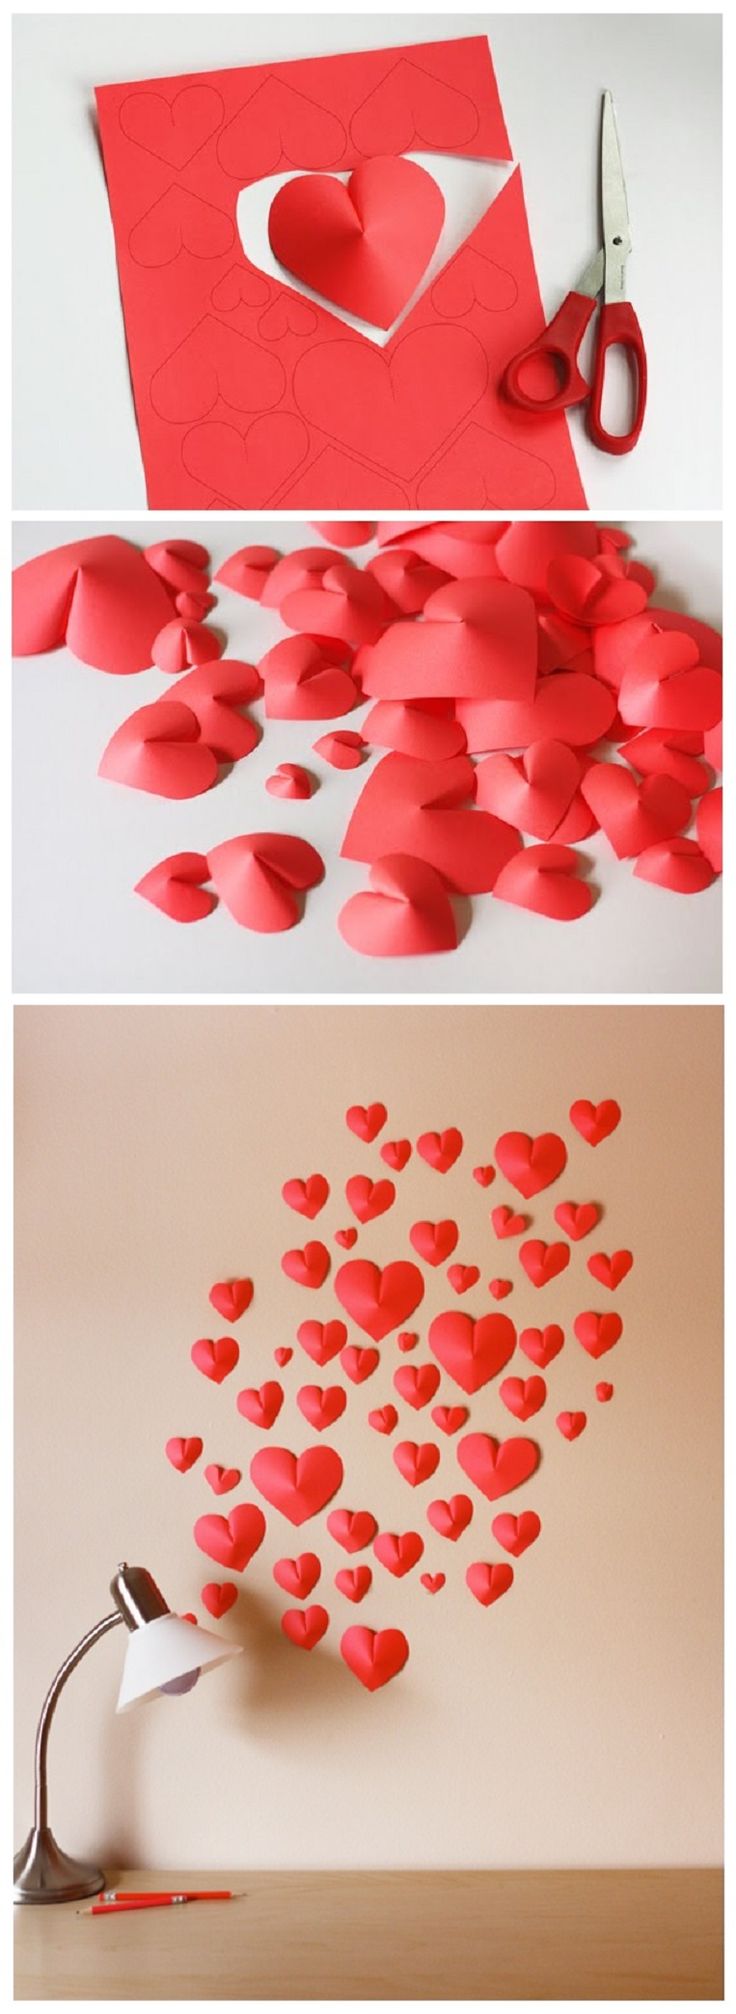 Heart Shape Wall Art